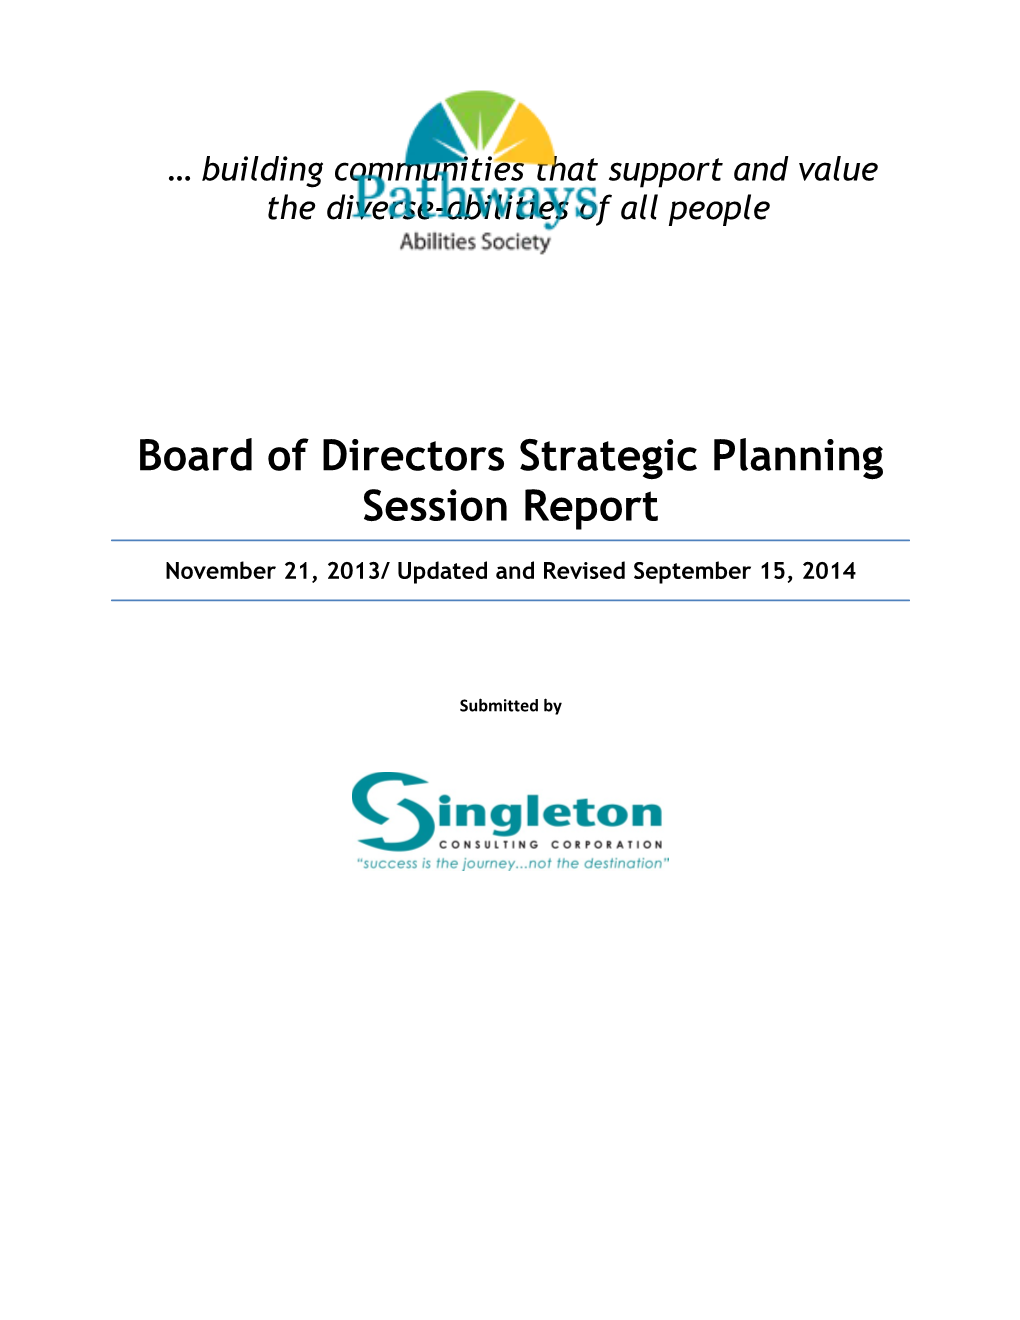 Board of Directors Strategic Planning Session Report